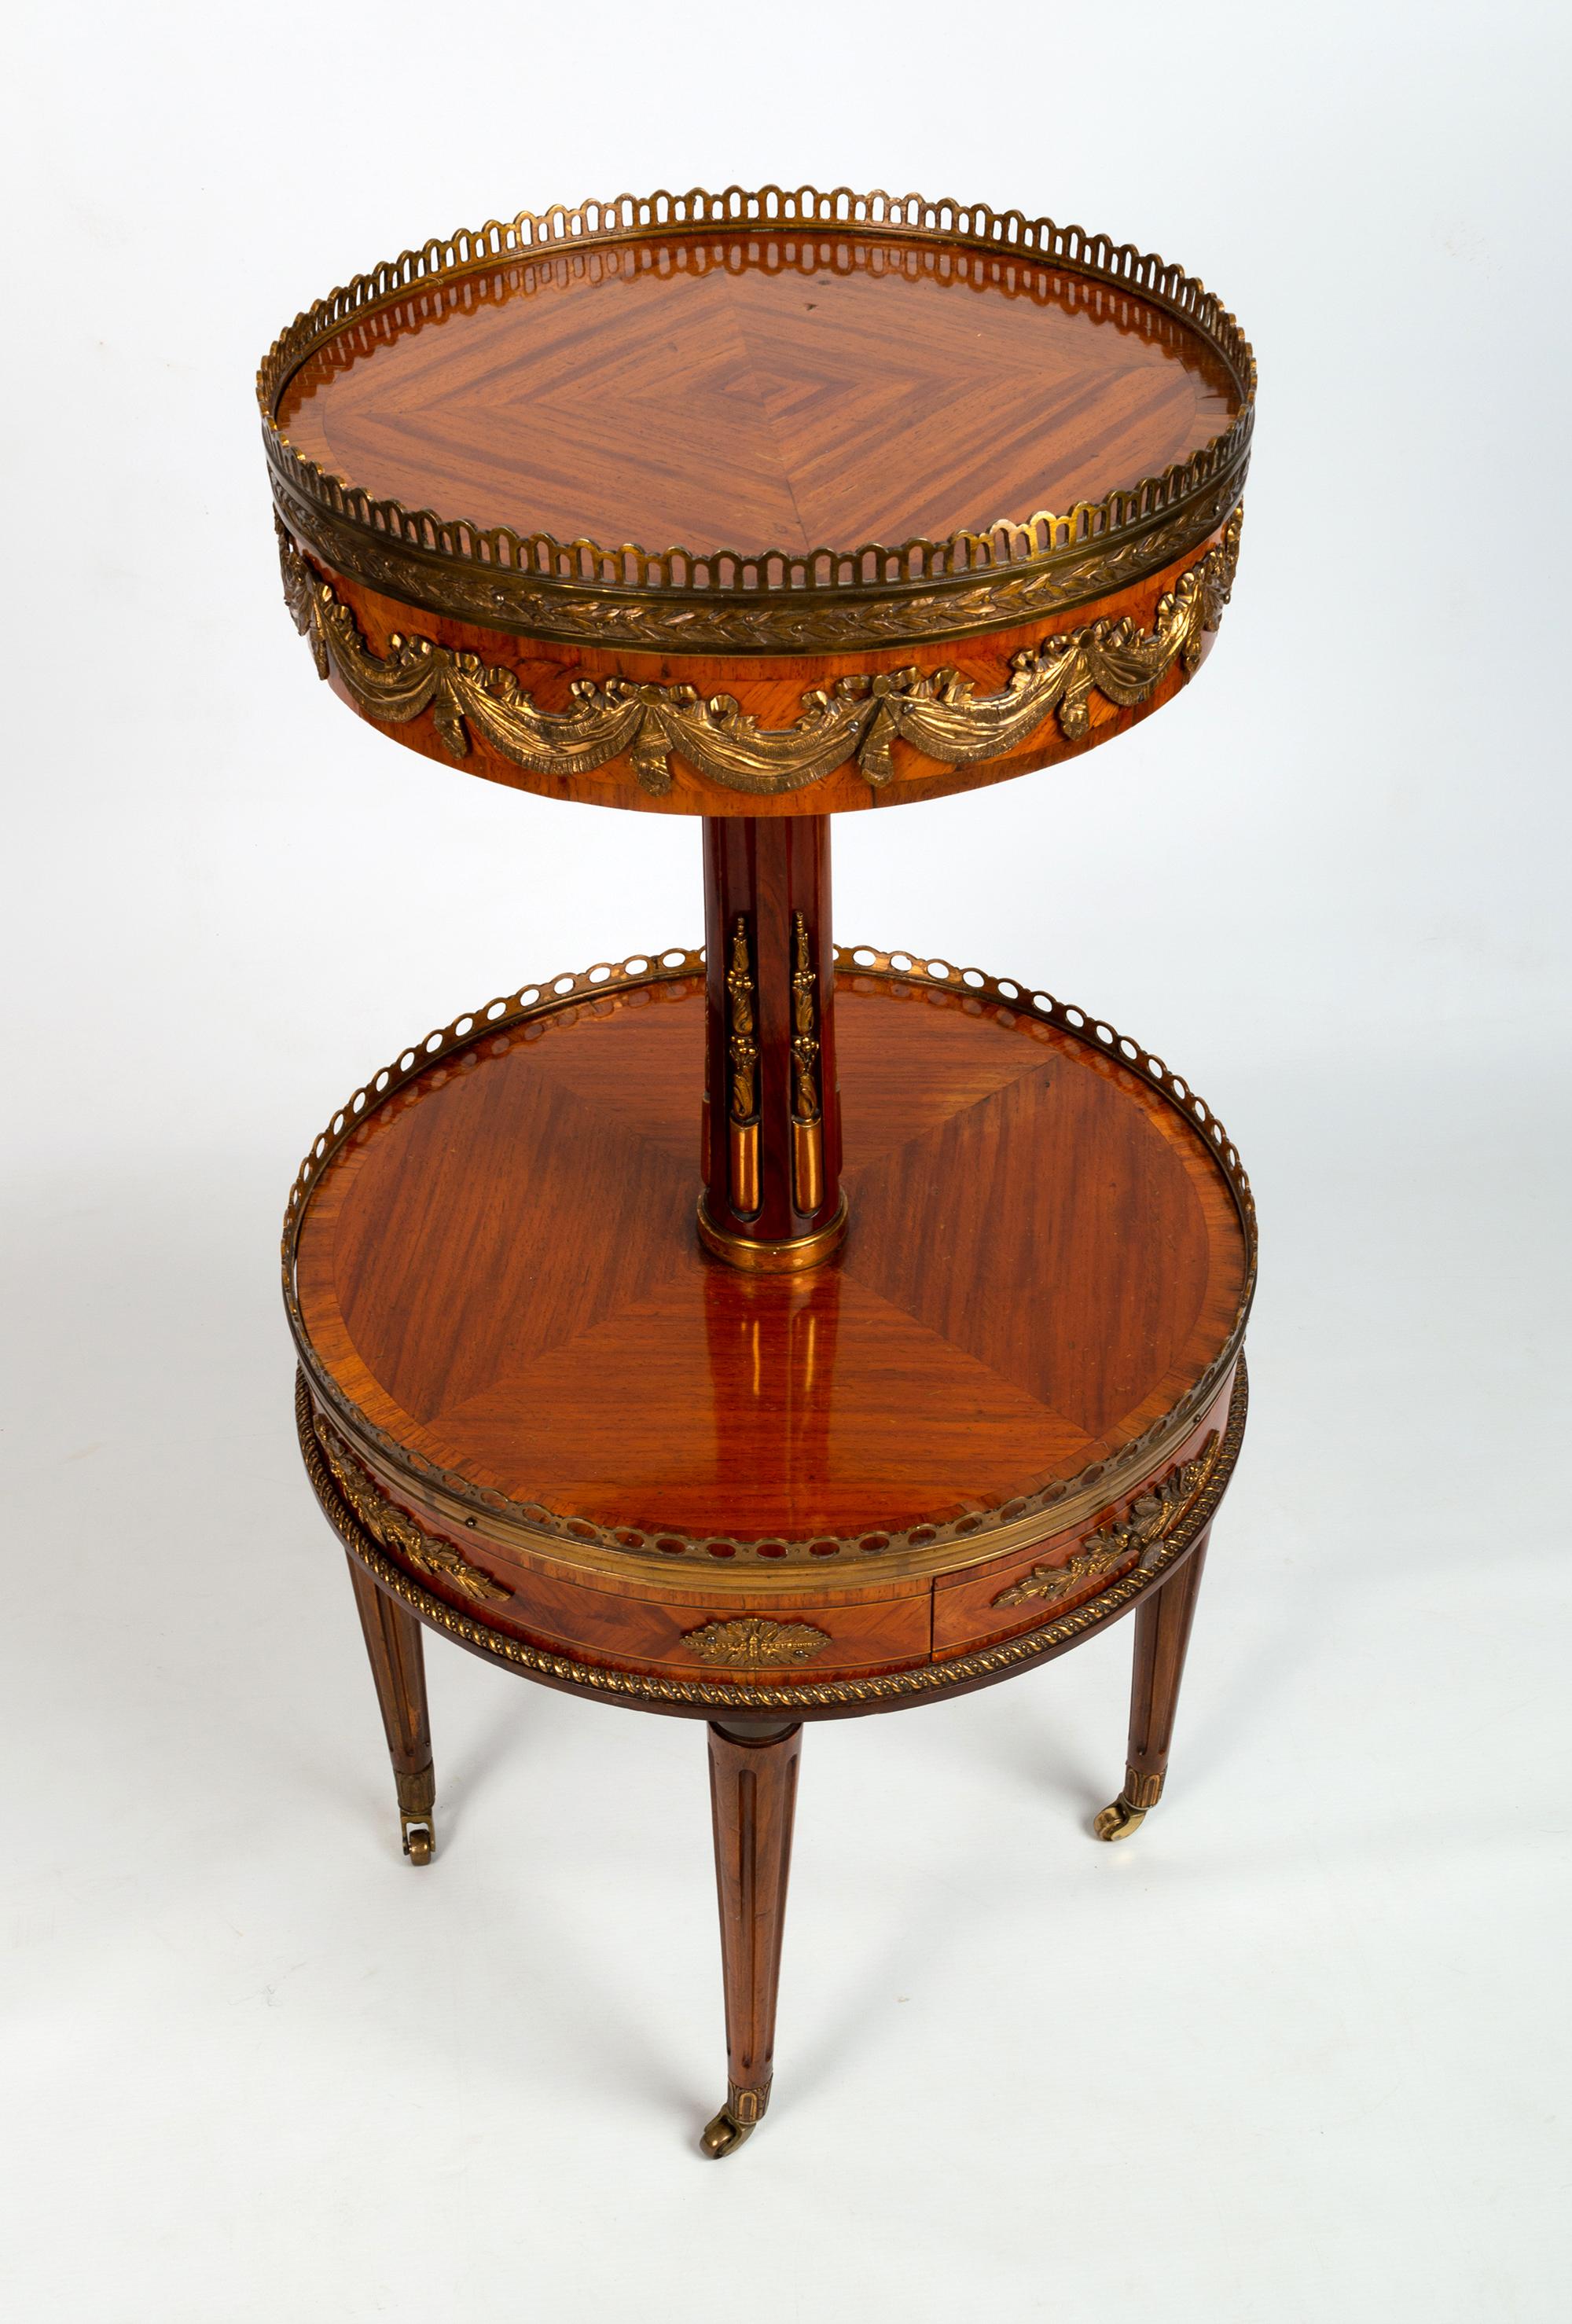 Antique French Louis XV Kingwood Etagere Side Table, Manner of François Linke For Sale 8